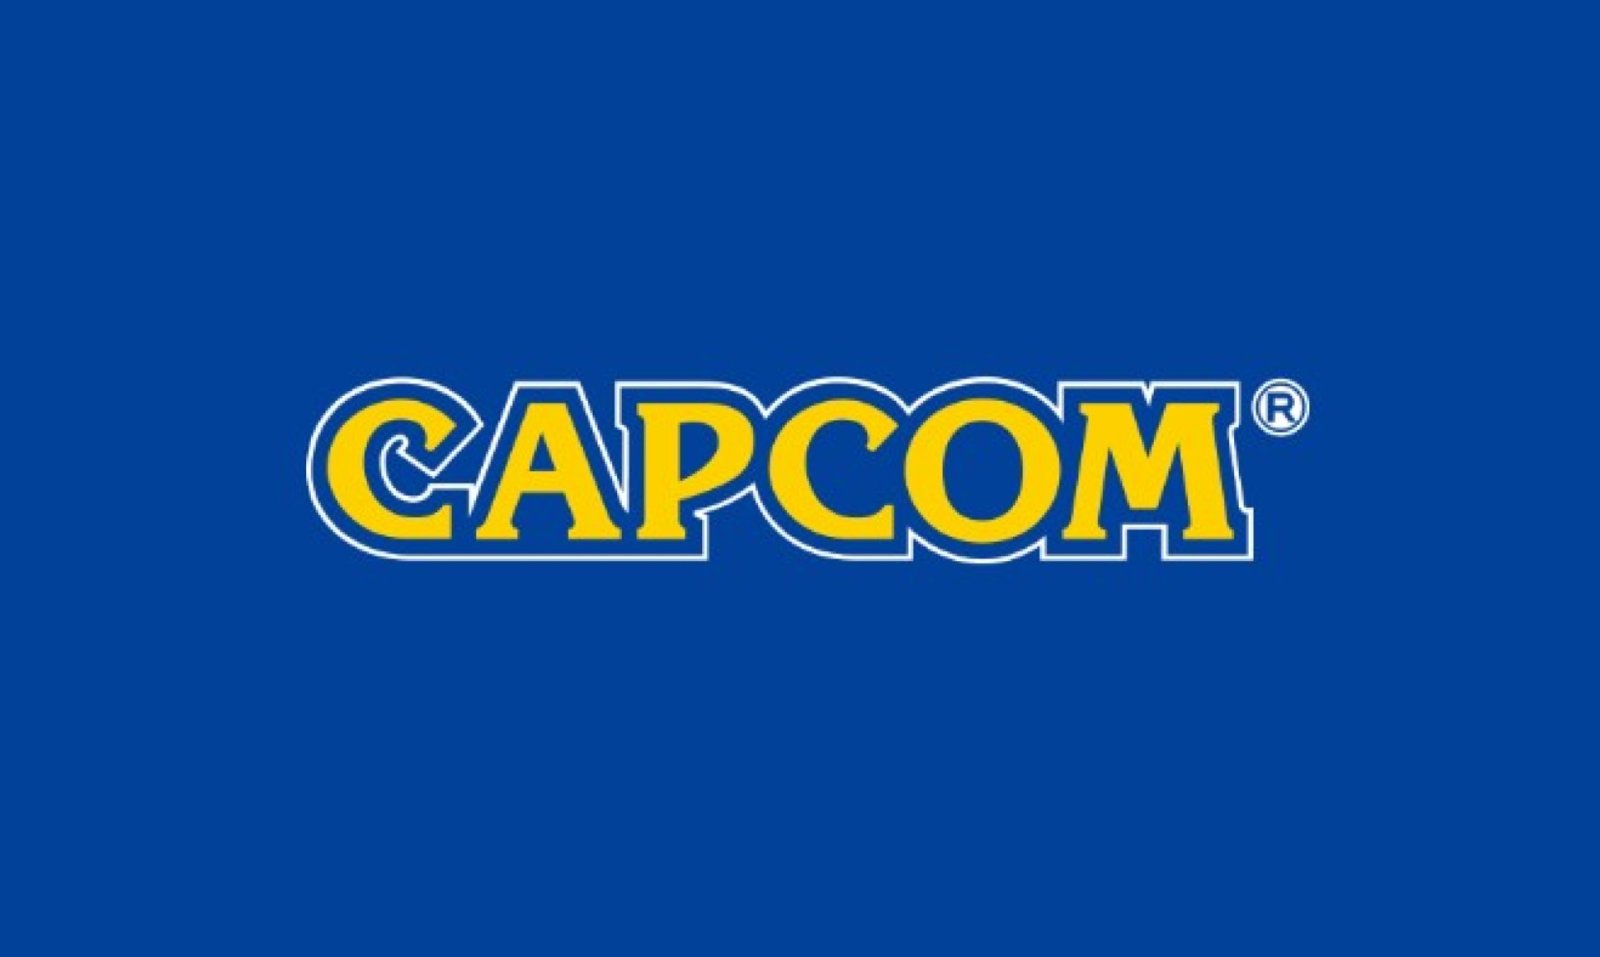 Capcom กำลังพัฒนาเอนจินใหม่ จะใช้ชื่อว่า REX Engine